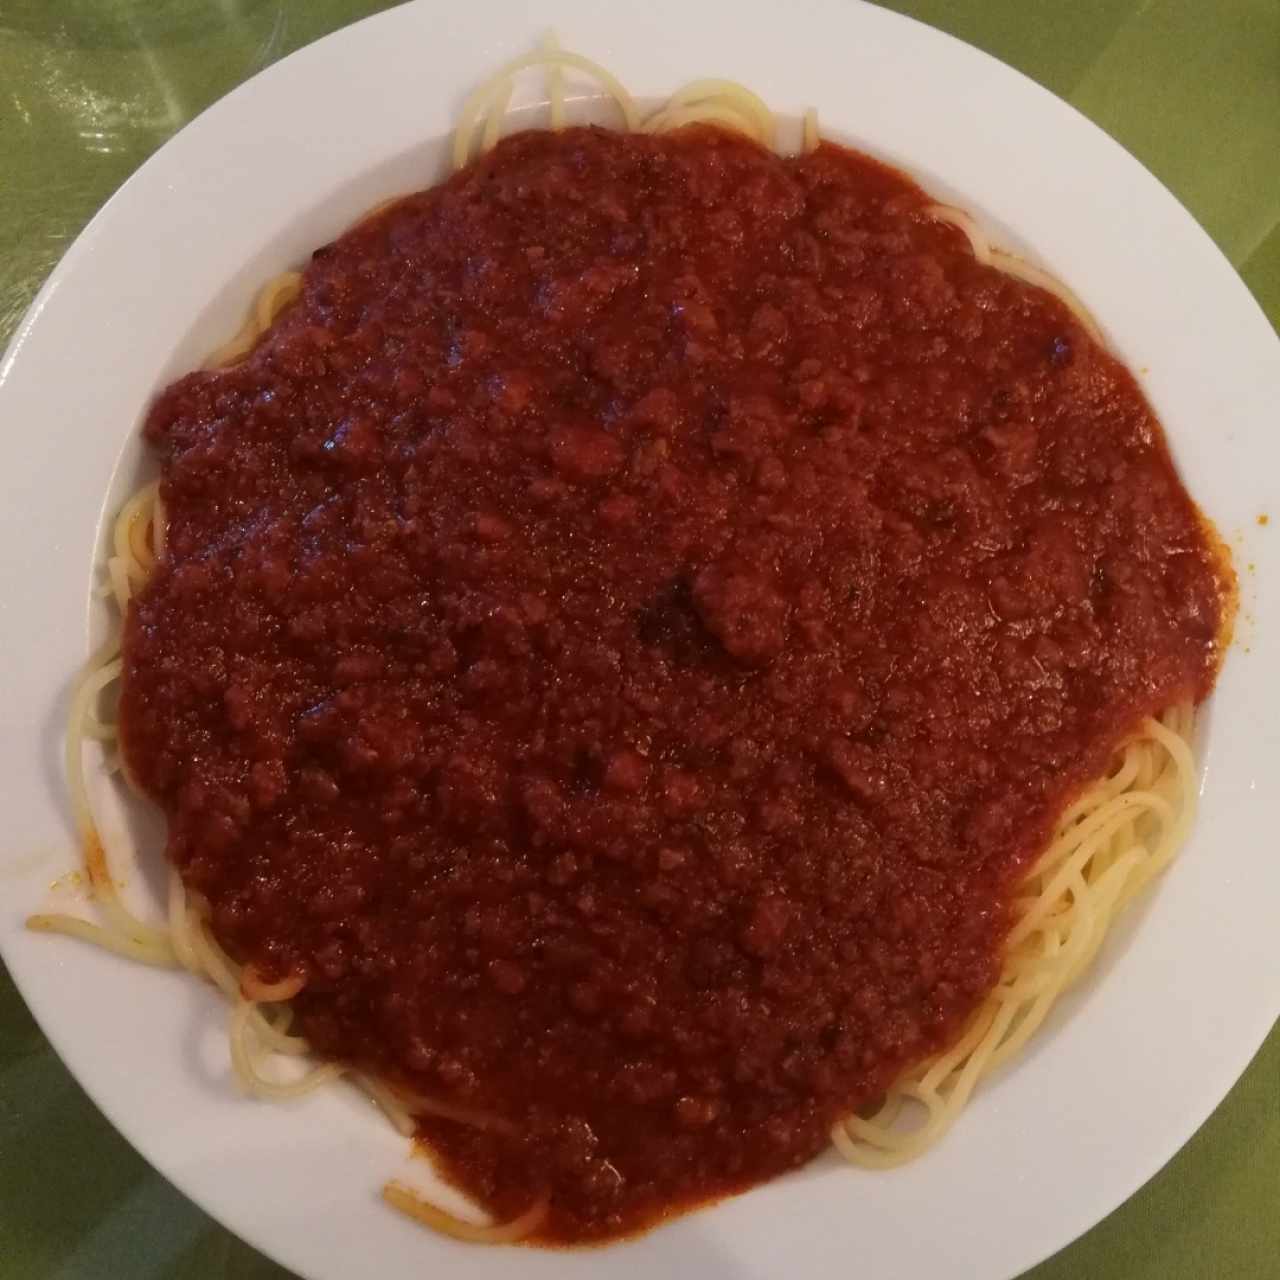 Spaguetti Bolognesa